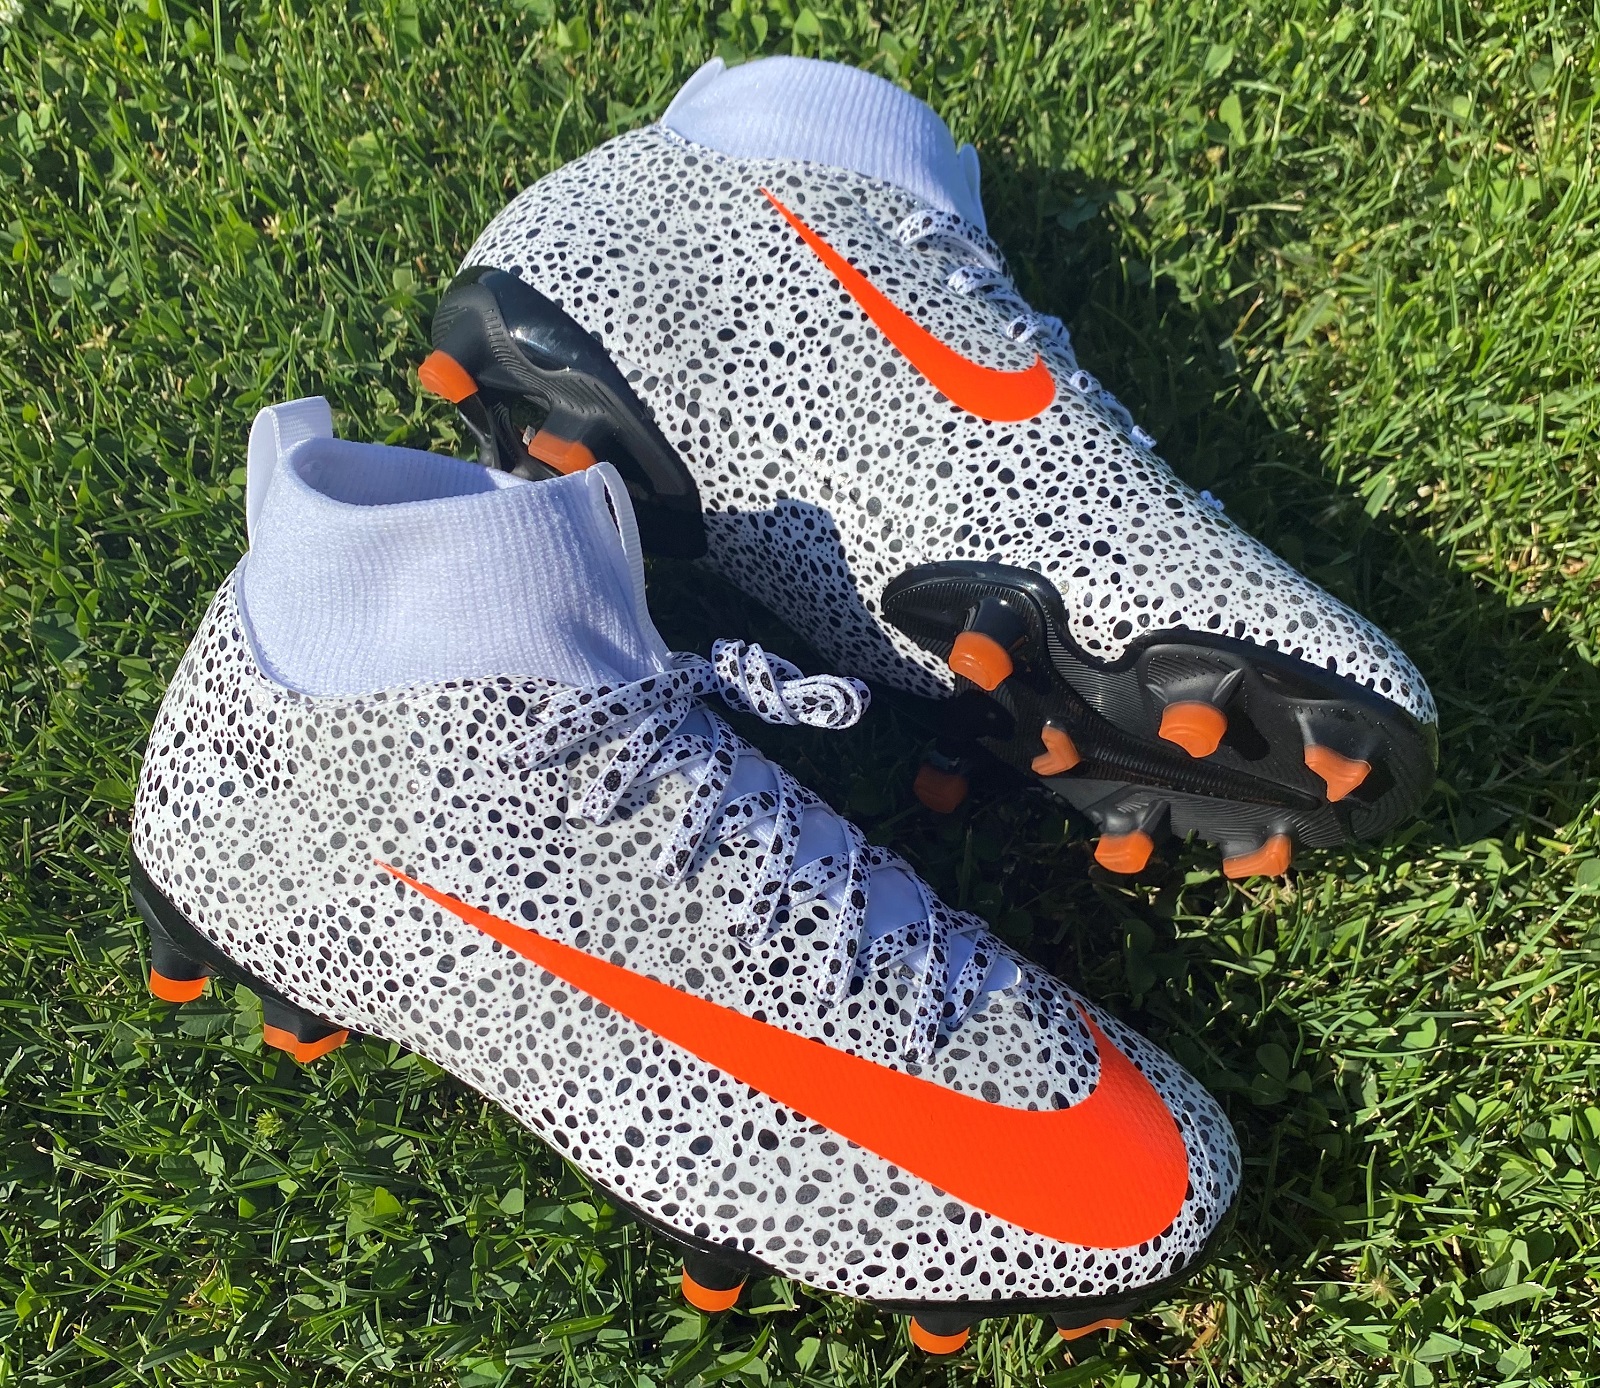 safari football shoes